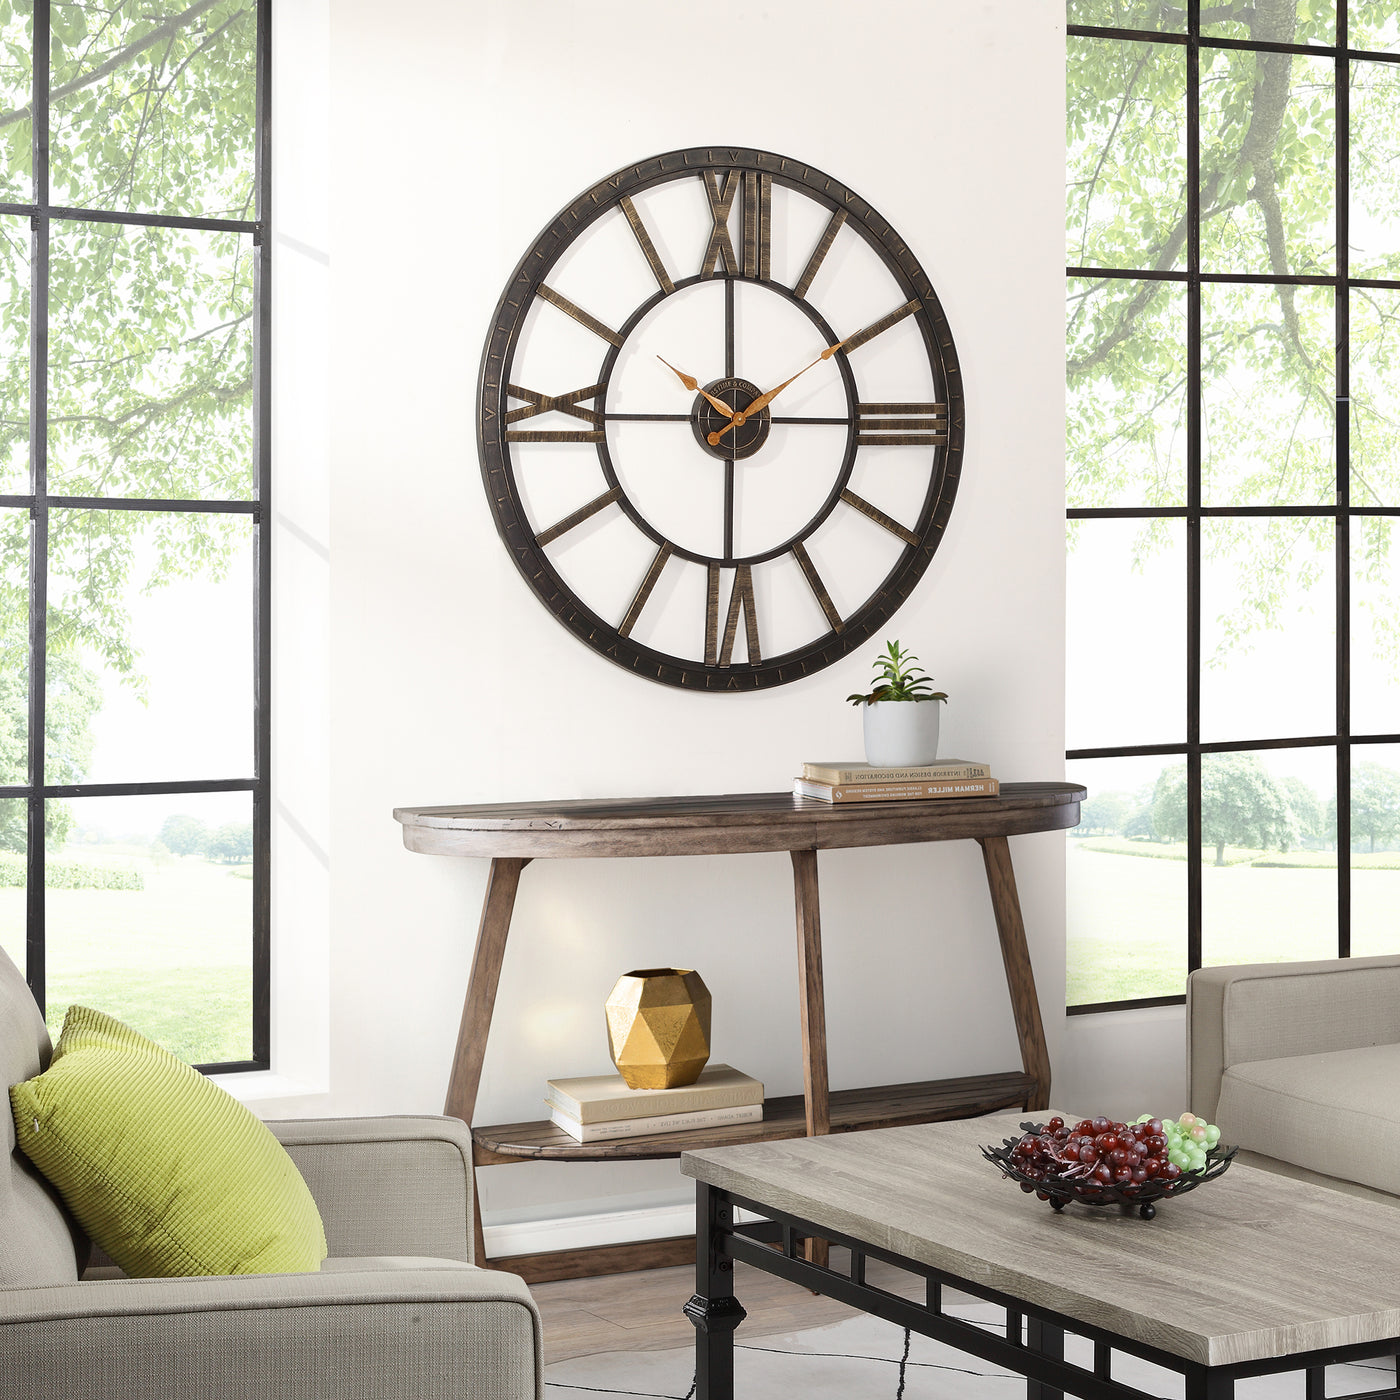 FirsTime & Co. Bronze Big Time Wall Clock